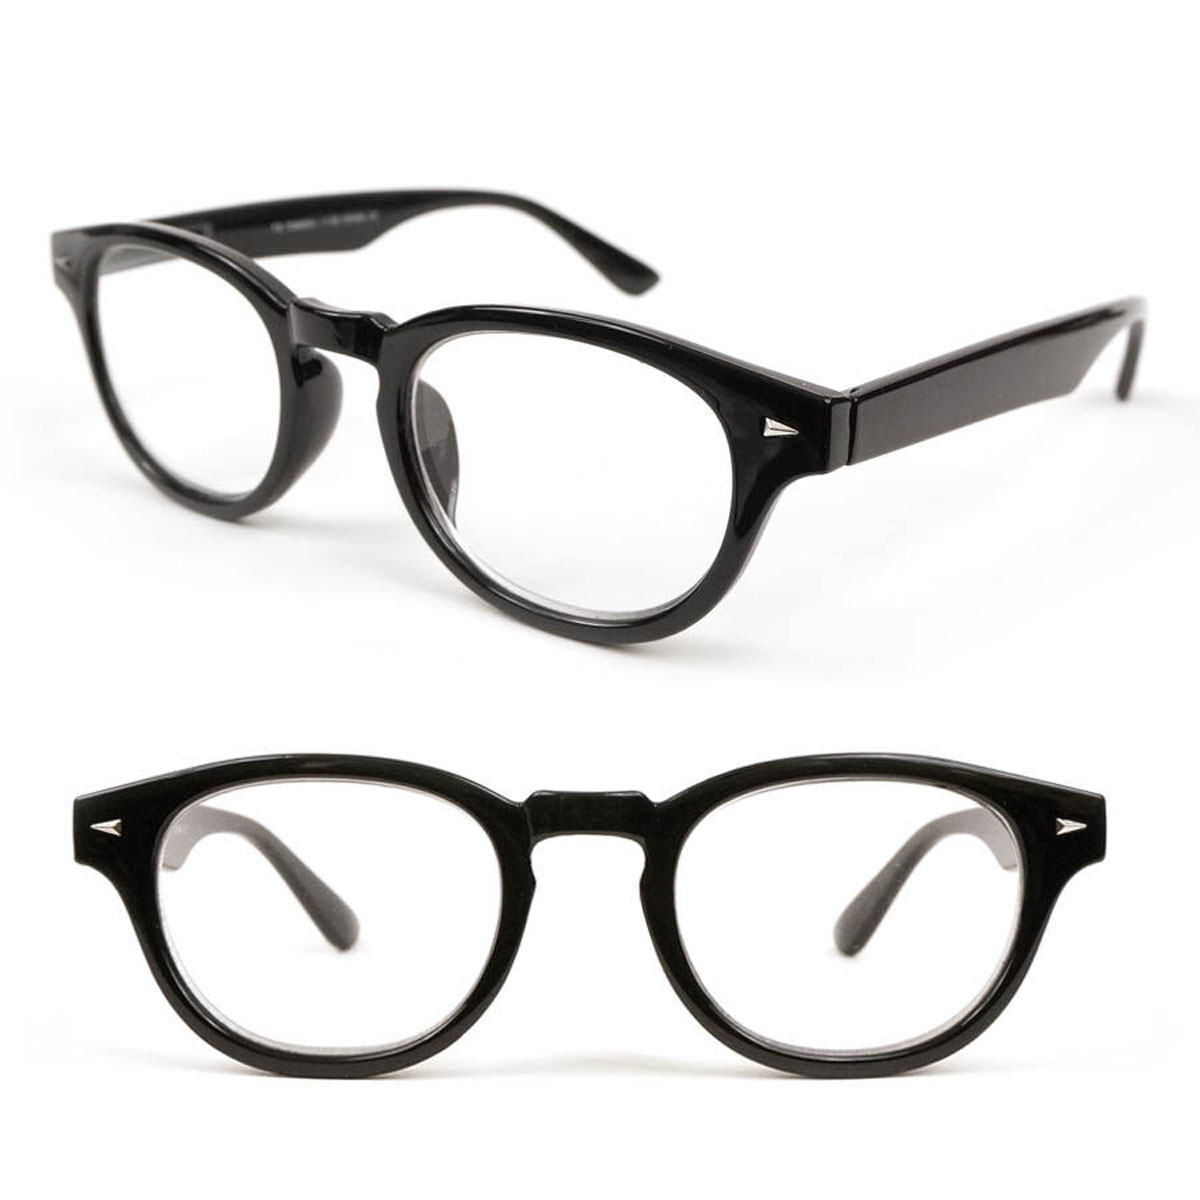 Medium Round Classic Frame Reading Glasses Geek Retro Vintage Style 100-375 - Black, +1.75